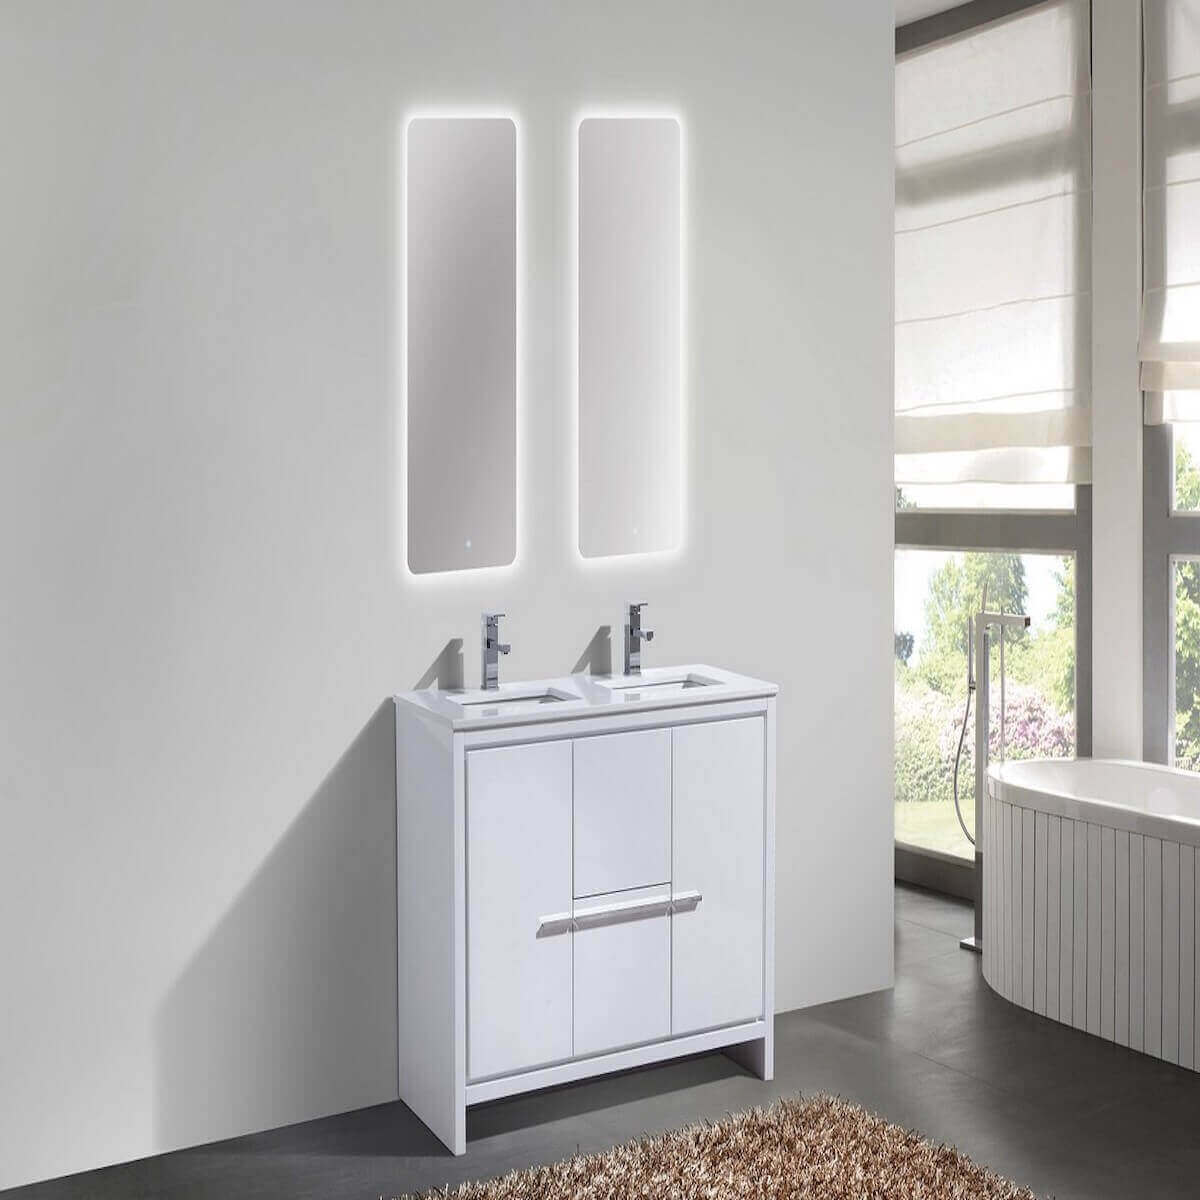 KubeBath Dolce 48" Gloss White Freestanding Double Vanity with Quartz Countertop AD648DGW in Bathroom #finish_high gloss white